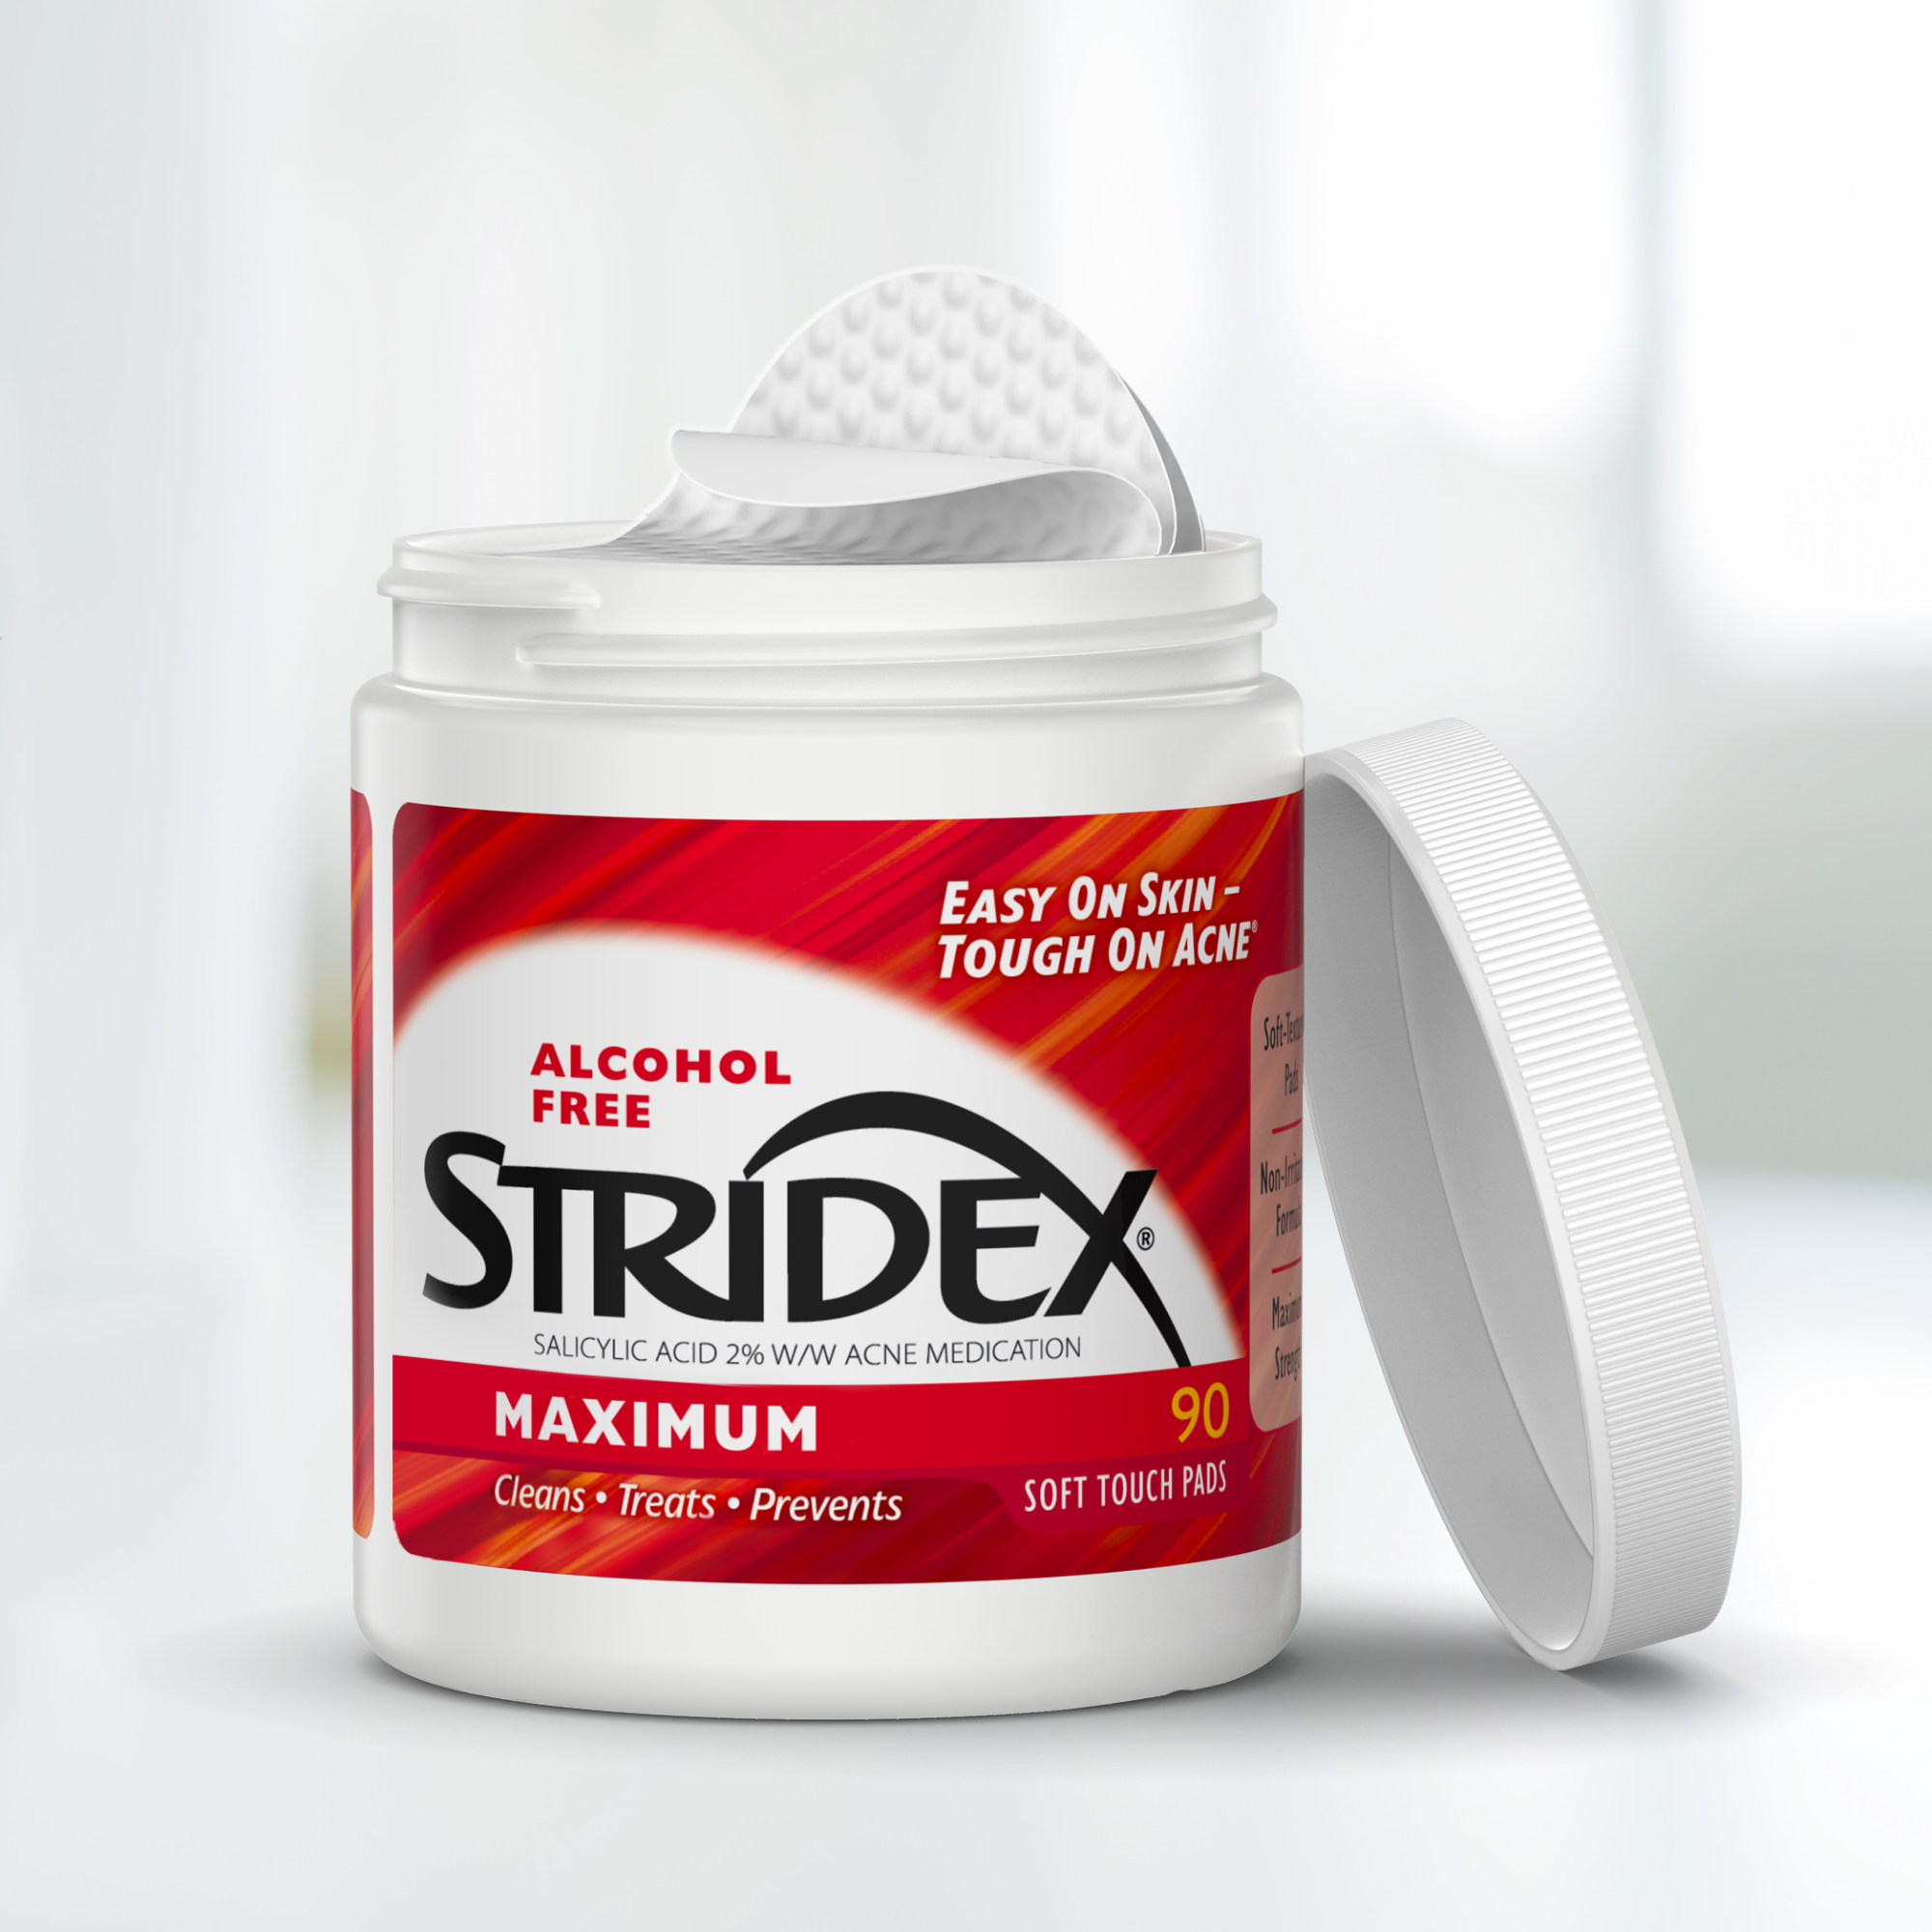 Stridex Medicated Acne Treatment Pads, Maximum Strength 2.0% Salicylic Acid, 90 Ct - image 3 of 13